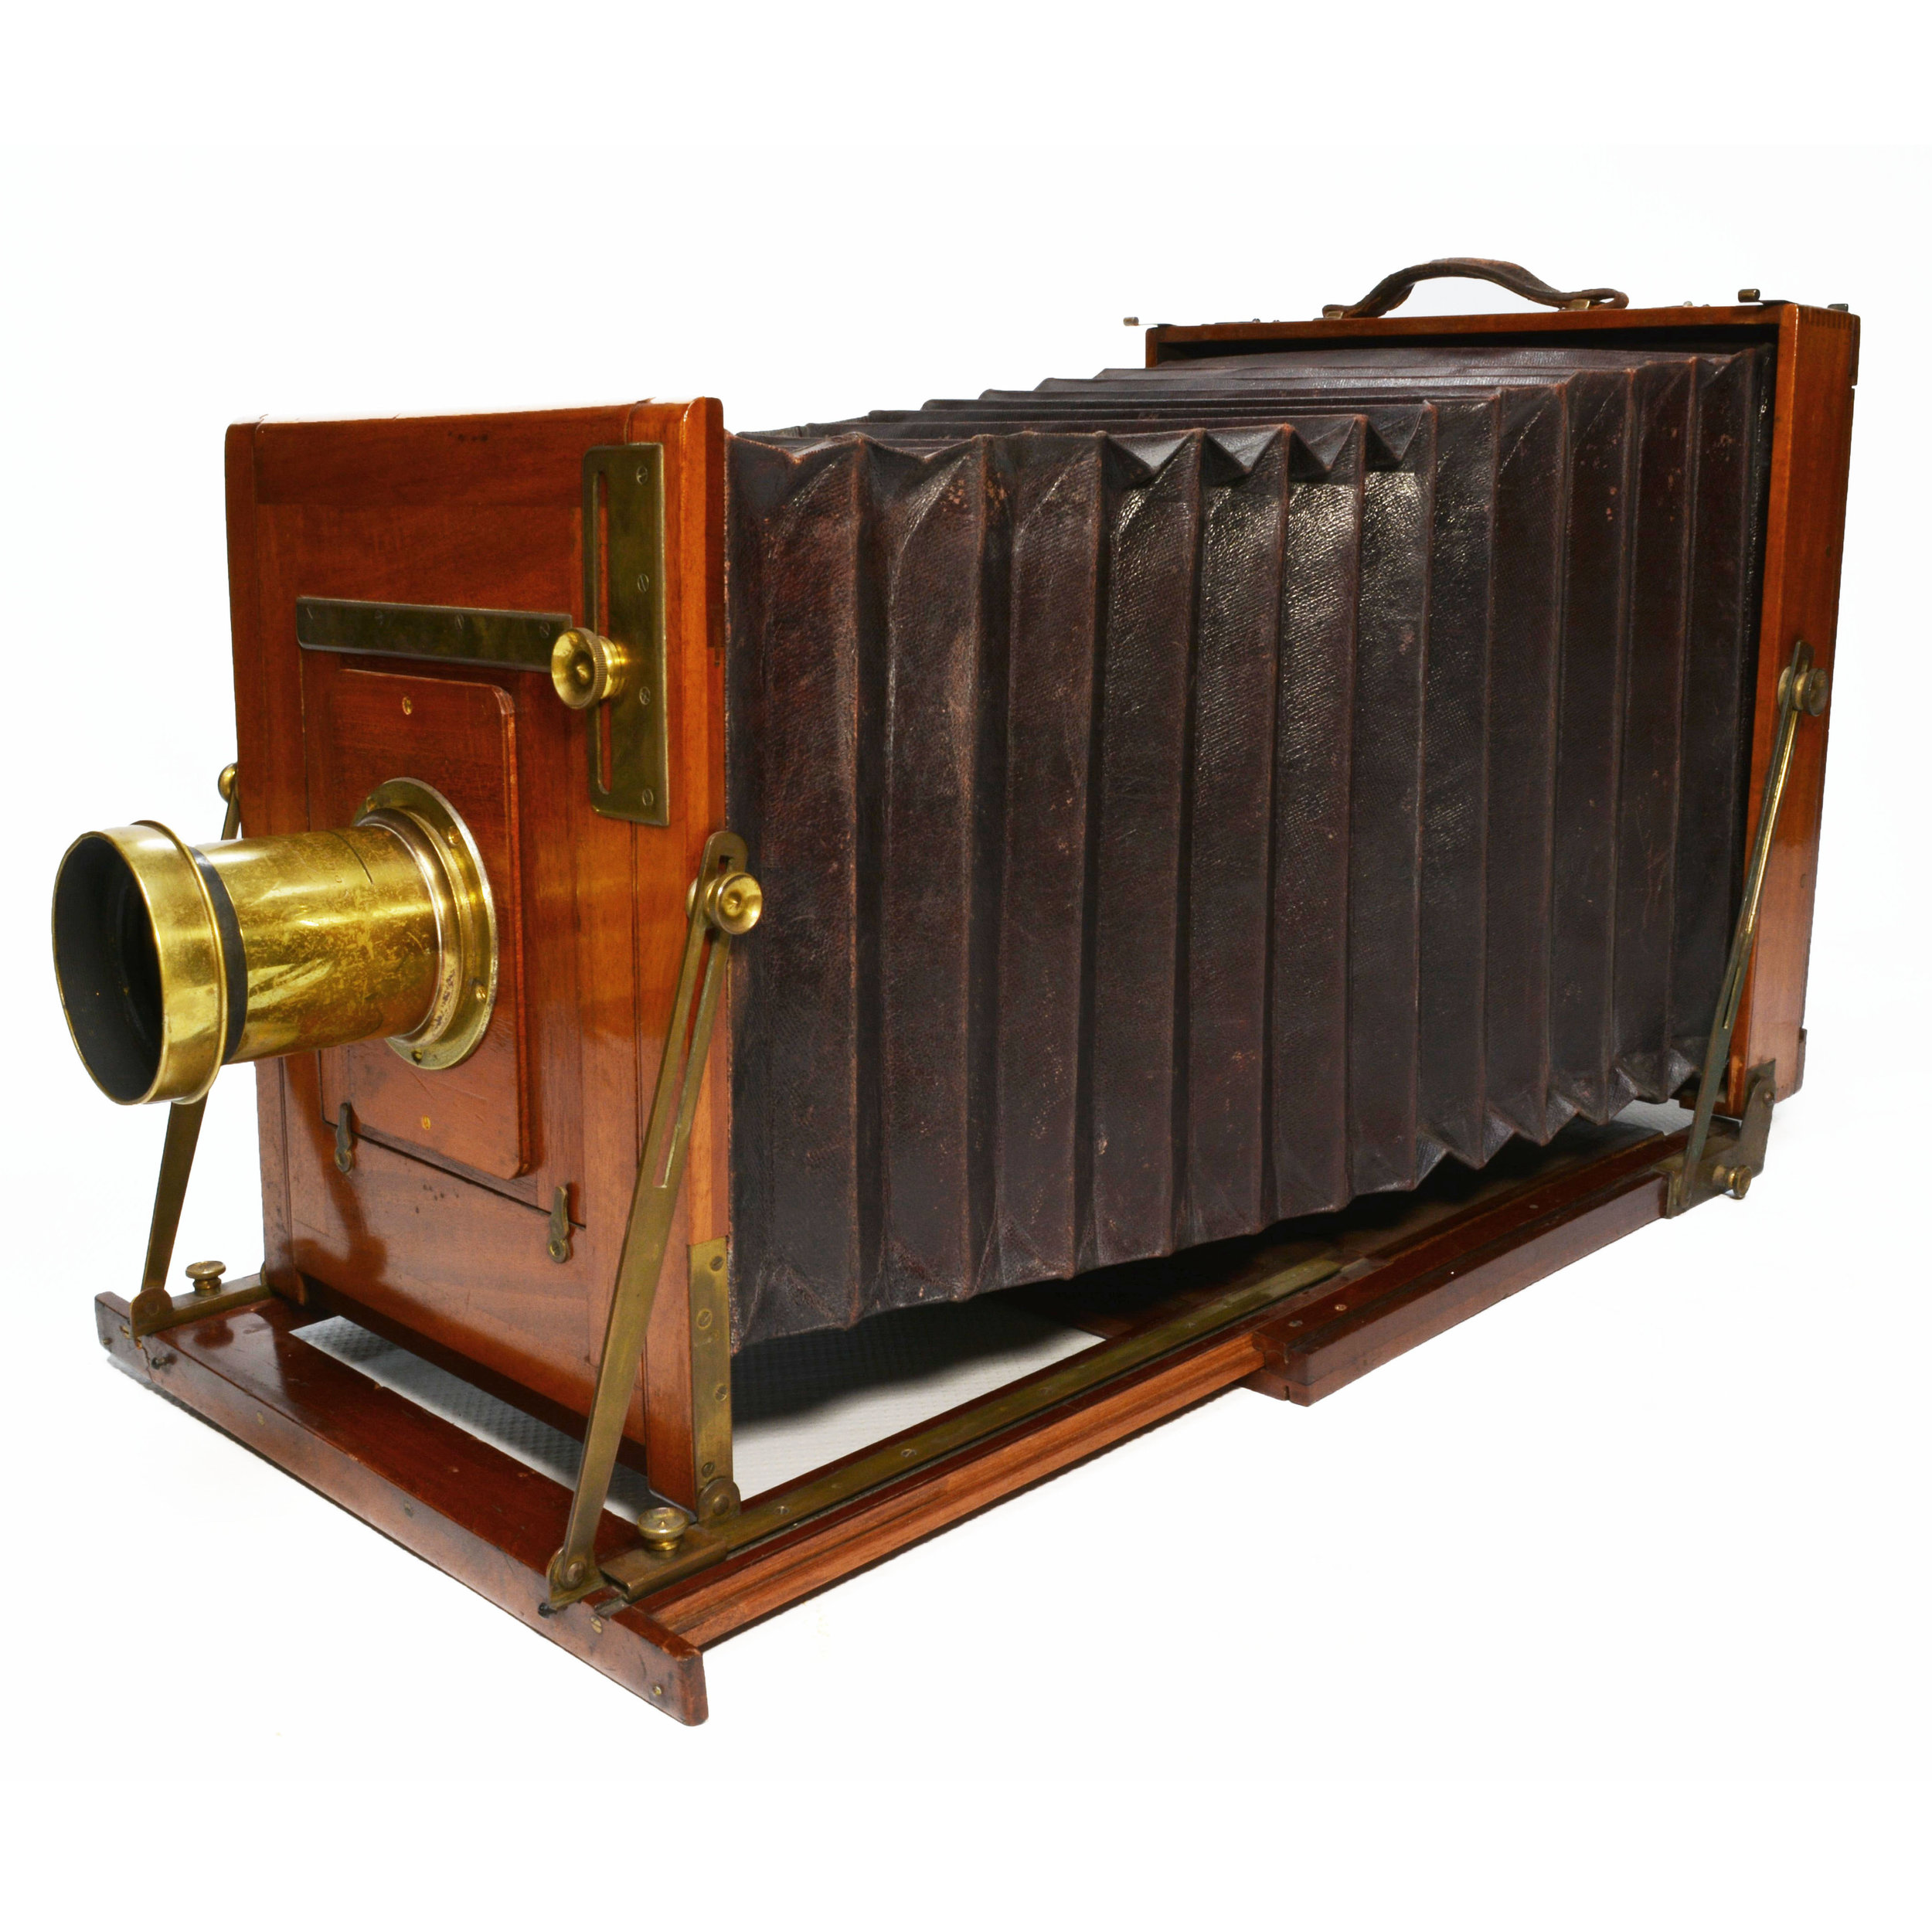 Smedley of Blackburn folding plate camera